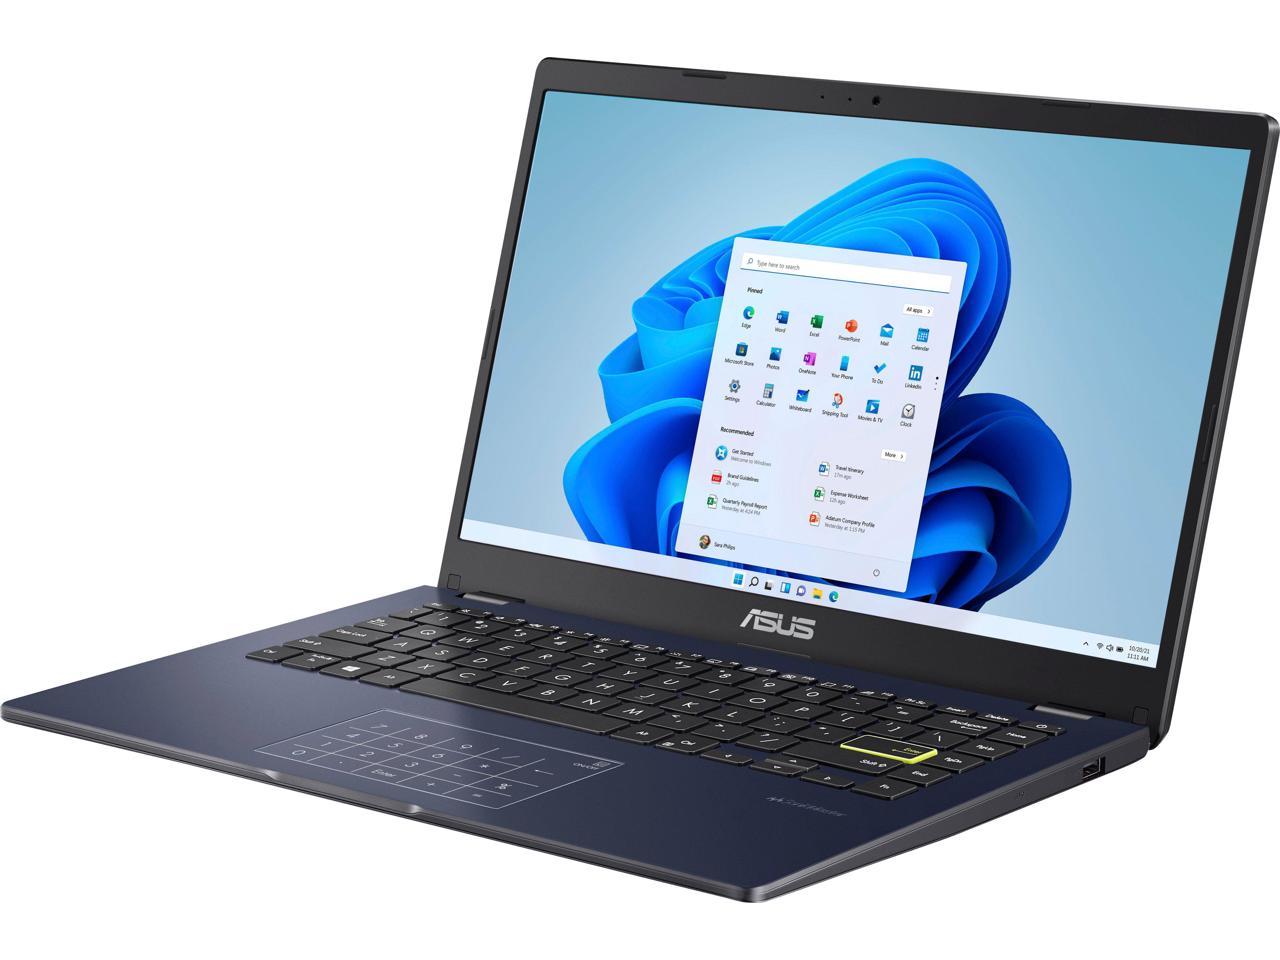 Asus 140 Laptop Intel Celeron N4500 4gb Memory 128gb Emmc Star Black E410ka Tb 6154